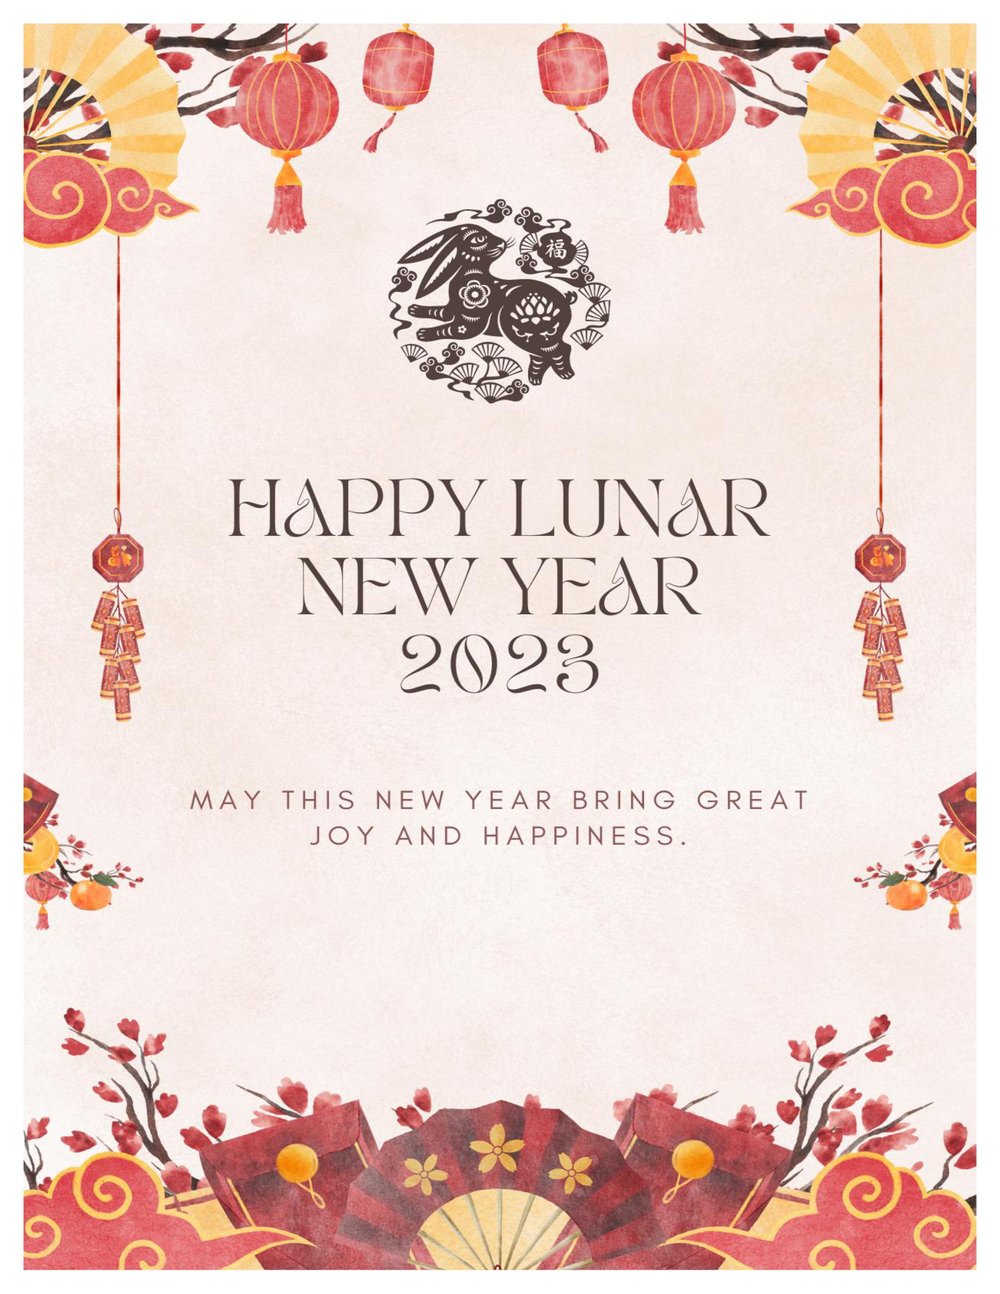 Lunar New Year Sign (1).jpg